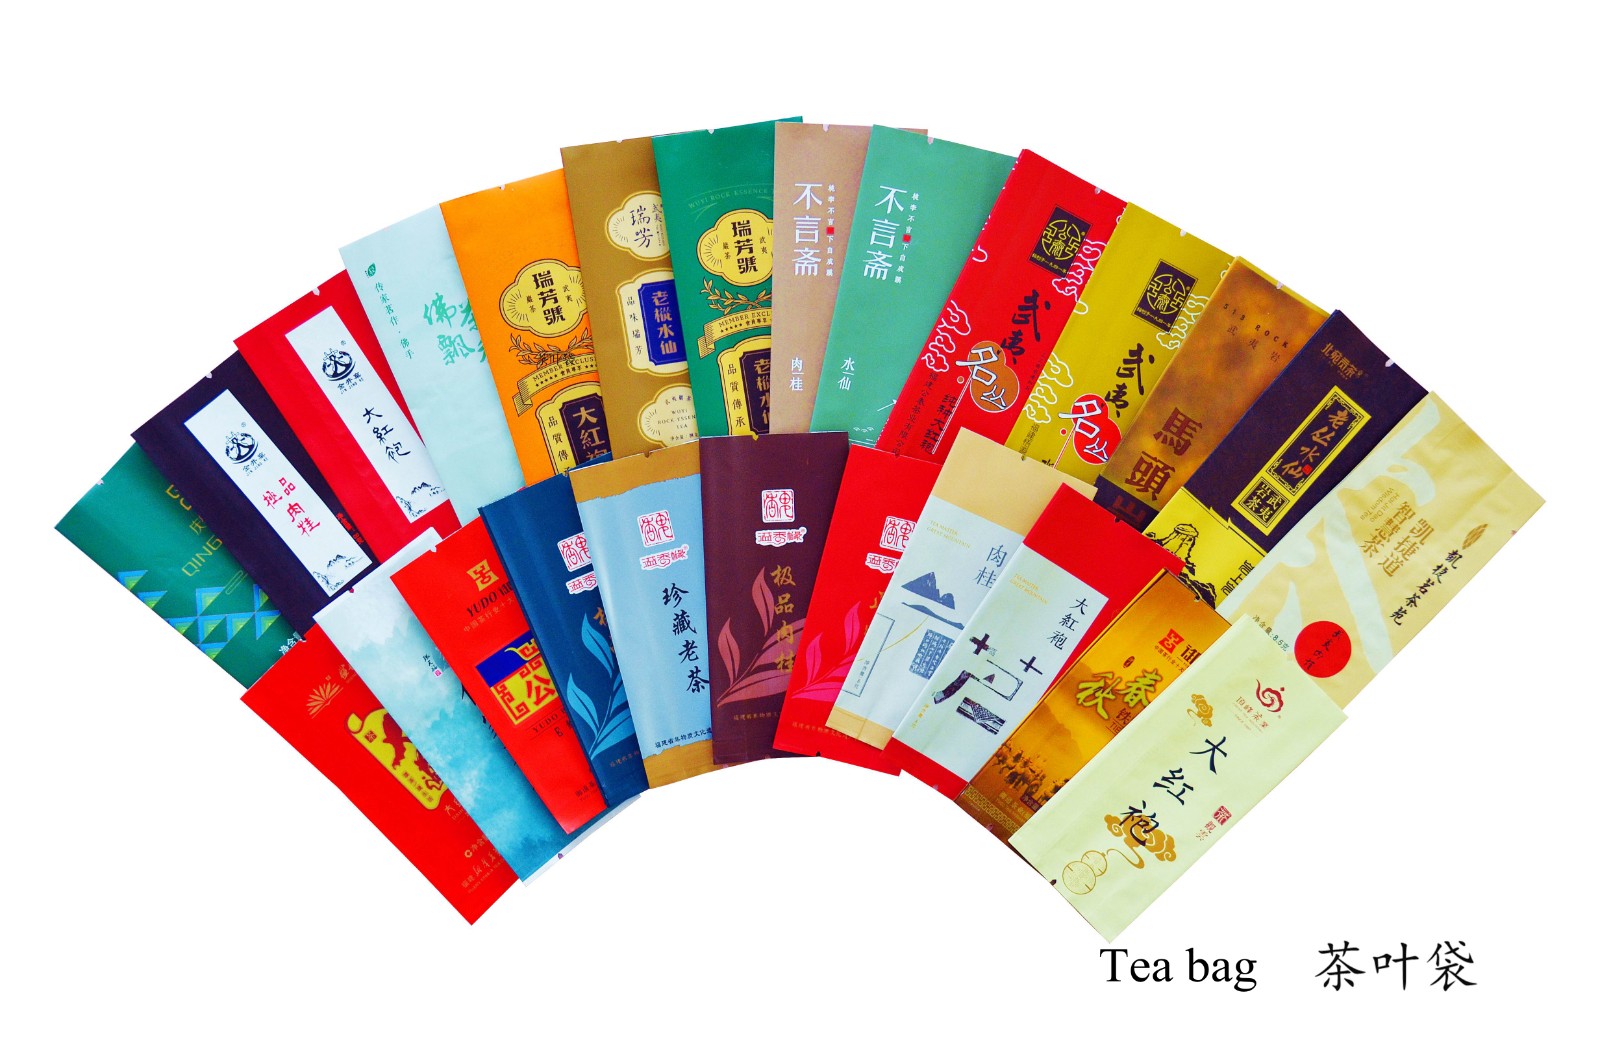 茶叶袋 Tea bag